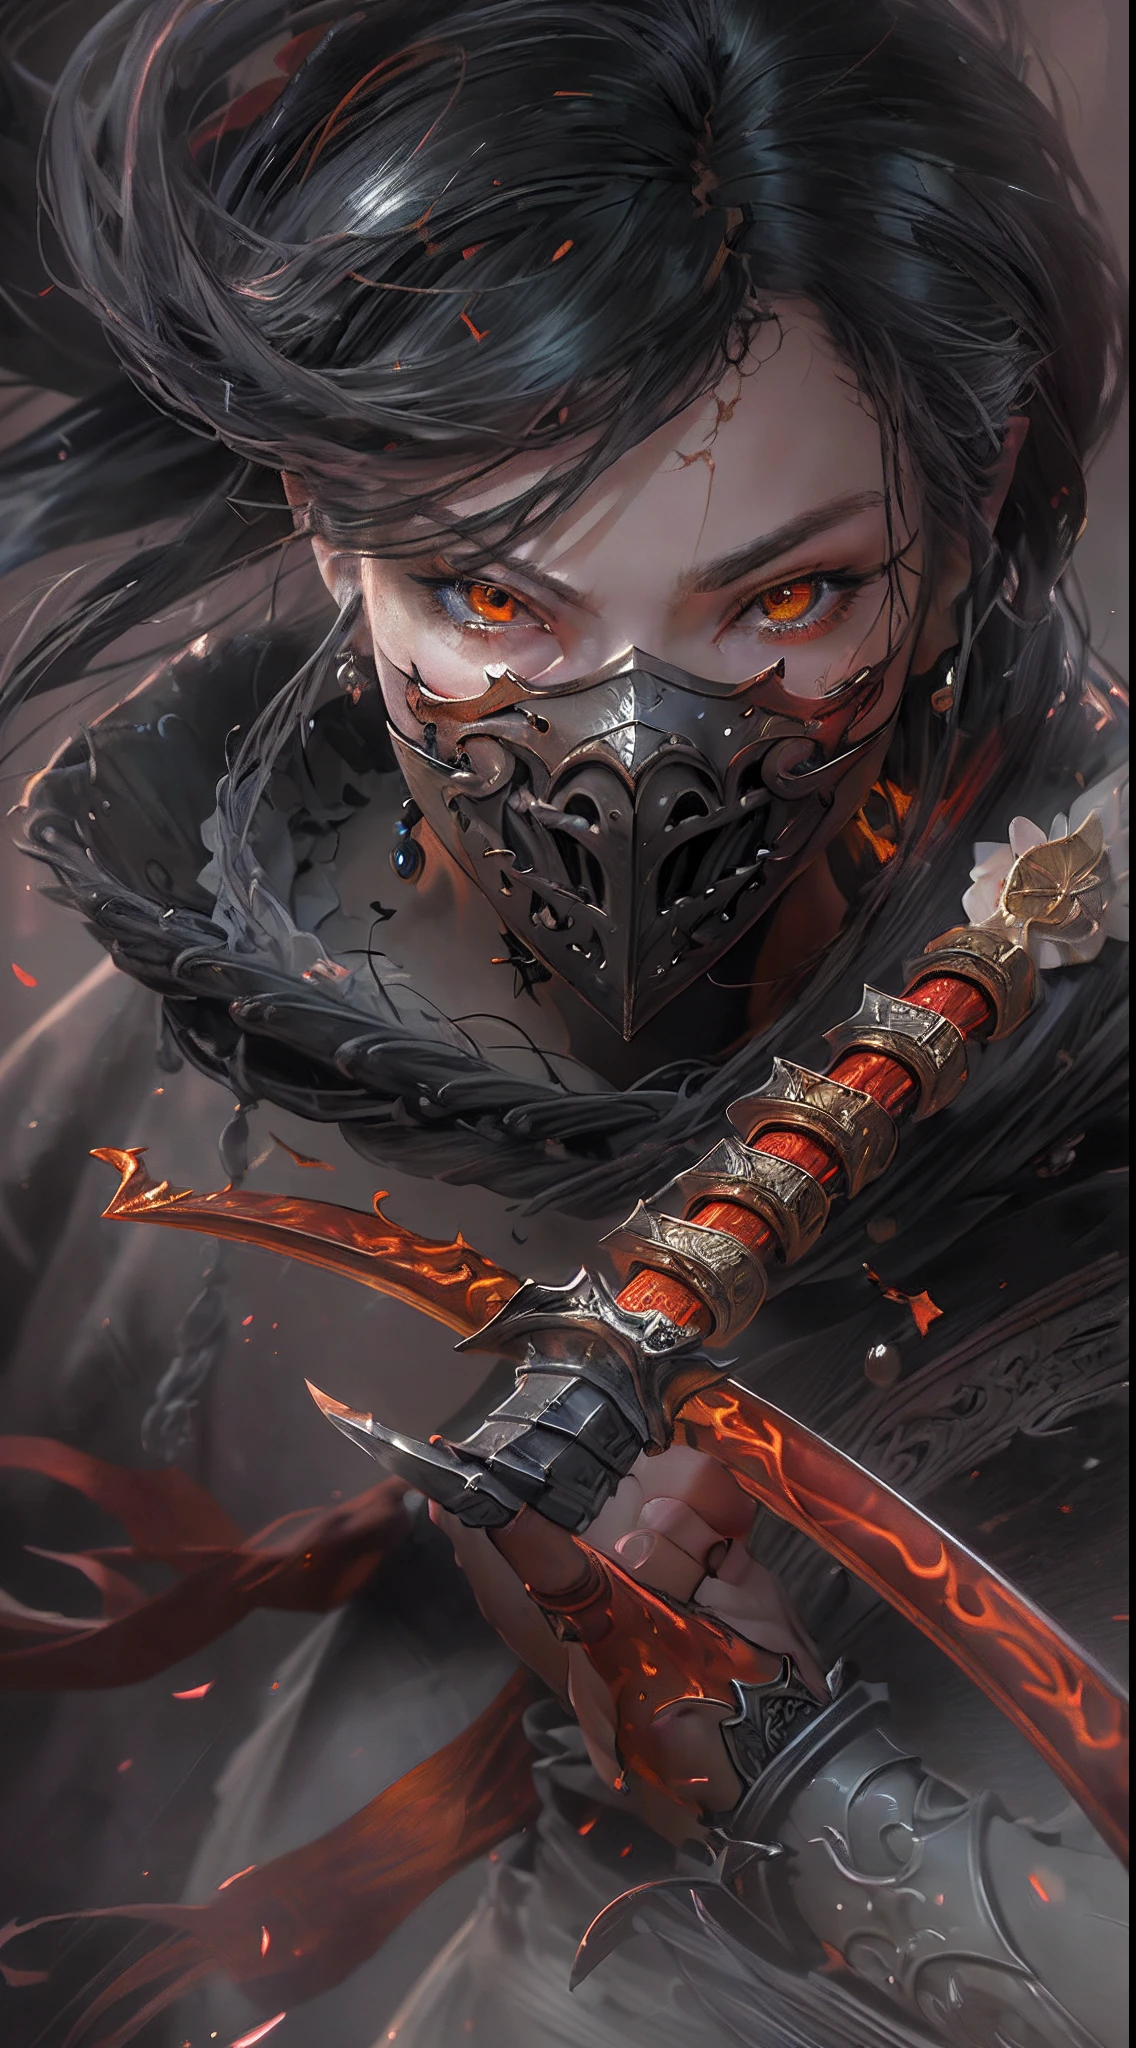 there is an illustration of a woman samurai fighting a ผิวแดง ปีศาจ in the streets at night. ซามูไรหญิงชาวญี่ปุ่น, นักรบหญิง, ใบหน้าที่มีรายละเอียดเป็นพิเศษ (รายละเอียดที่ดีที่สุด, ผลงานชิ้นเอก, คุณภาพดีที่สุด: 1.5), เป็นผู้หญิงเป็นพิเศษ, ผิวสีซีดสวยงามอย่างประณีต, ผมยาว, ผมสีดำ, สีดวงตาแบบไดนามิก, ติดอาวุธด้วยคาทาน่า (รายละเอียดที่ดีที่สุด, ผลงานชิ้นเอก, คุณภาพดีที่สุด: 1.5), ดาบวาววับ (รายละเอียดที่ดีที่สุด, ผลงานชิ้นเอก, คุณภาพดีที่สุด: 1.3) สวมชุดเกราะ. ทำลาย [ปีศาจ] (รายละเอียดที่ดีที่สุด, ผลงานชิ้นเอก, คุณภาพดีที่สุด: 1.4), ผิวแดง (รายละเอียดที่ดีที่สุด, ผลงานชิ้นเอก, คุณภาพดีที่สุด: 1.5), ตาสีดำ, แผงคอสีดำ, ปีกค้างคาว (รายละเอียดที่ดีที่สุด, ผลงานชิ้นเอก, คุณภาพดีที่สุด: 1.5), แตร, big แตร, มีดาบยาวปกคลุมไปด้วยเปลวเพลิง (รายละเอียดที่ดีที่สุด, ผลงานชิ้นเอก, คุณภาพดีที่สุด: 1.5), ปกคลุมไปด้วยไฟสีแดง. ถนนญี่ปุ่นยุคกลาง (รายละเอียดที่ดีที่สุด, ผลงานชิ้นเอก, คุณภาพดีที่สุด: 1.4) พื้นหลัง, เวลากลางคืน, แสงจันทร์, ไฟถนน, มุมกว้างพิเศษ, รายละเอียดสูง, ได้รับรางวัล, คุณภาพดีที่สุด, เอชดี, 16k, การเรนเดอร์ 3 มิติ, รายละเอียดสูงs, คุณภาพดีที่สุด, ความสูง, มุมกว้างพิเศษ, การเรนเดอร์ 3 มิติ, เหมือนจริง, สมจริงเป็นพิเศษ [[ถูกต้องตามหลักกายวิภาค]]